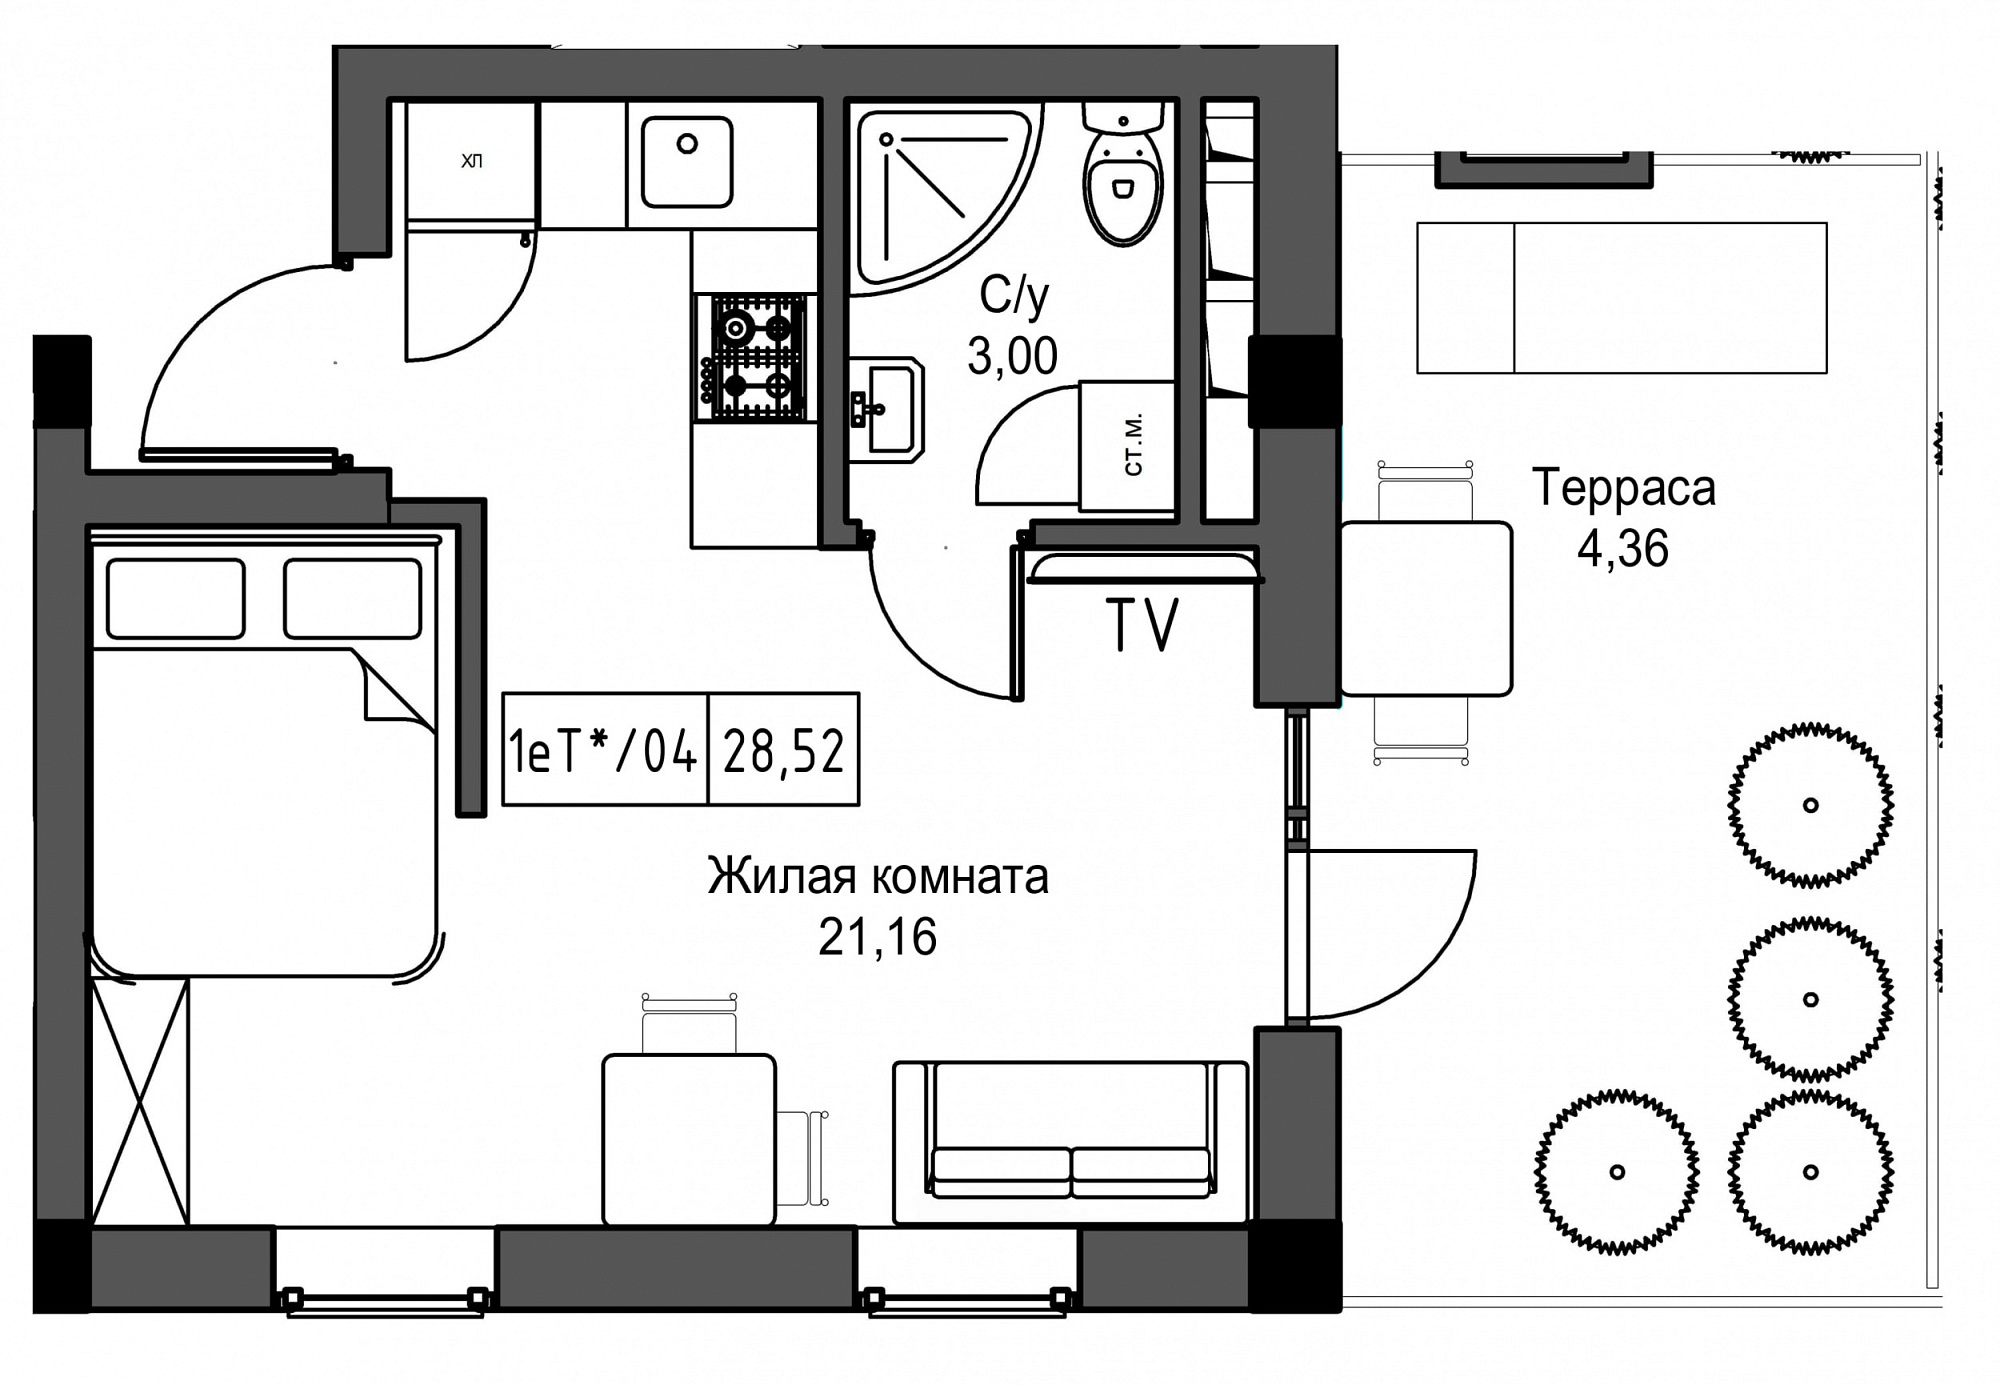 Планування 1-к квартира площею 28.52м2, UM-002-05/0045.